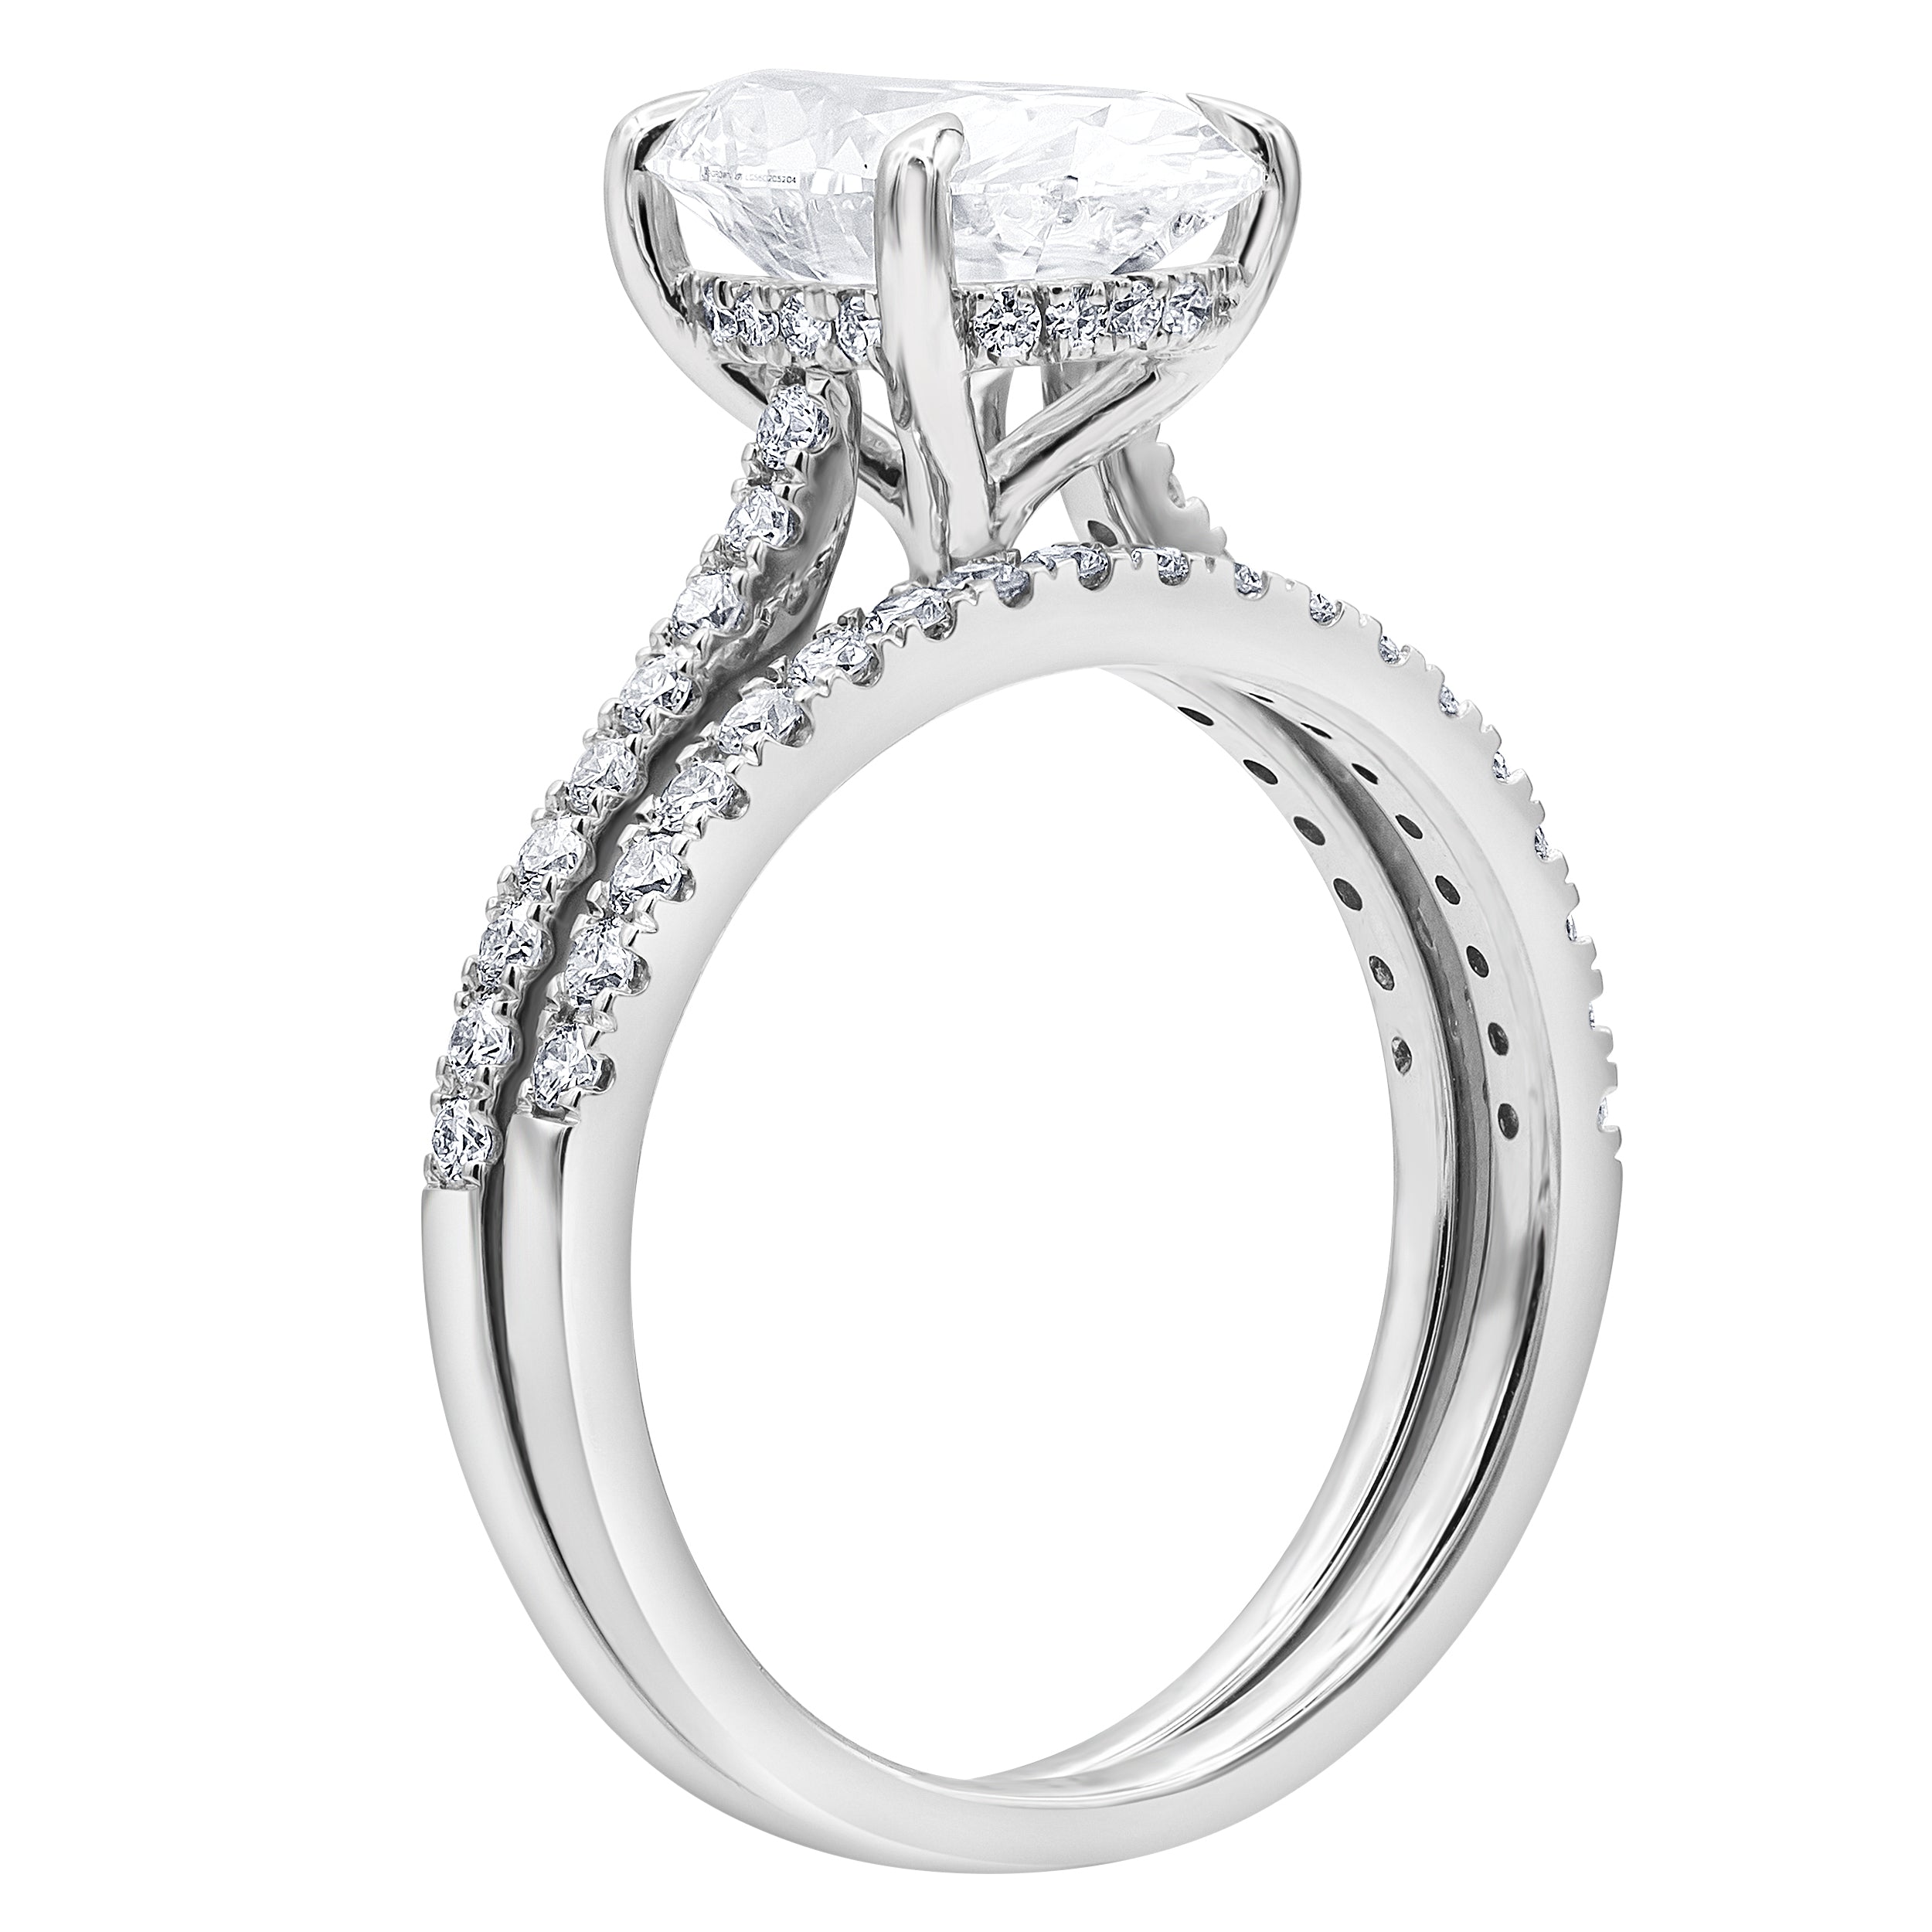 3.5 carat Oval Hidden Halo Diamond Ring